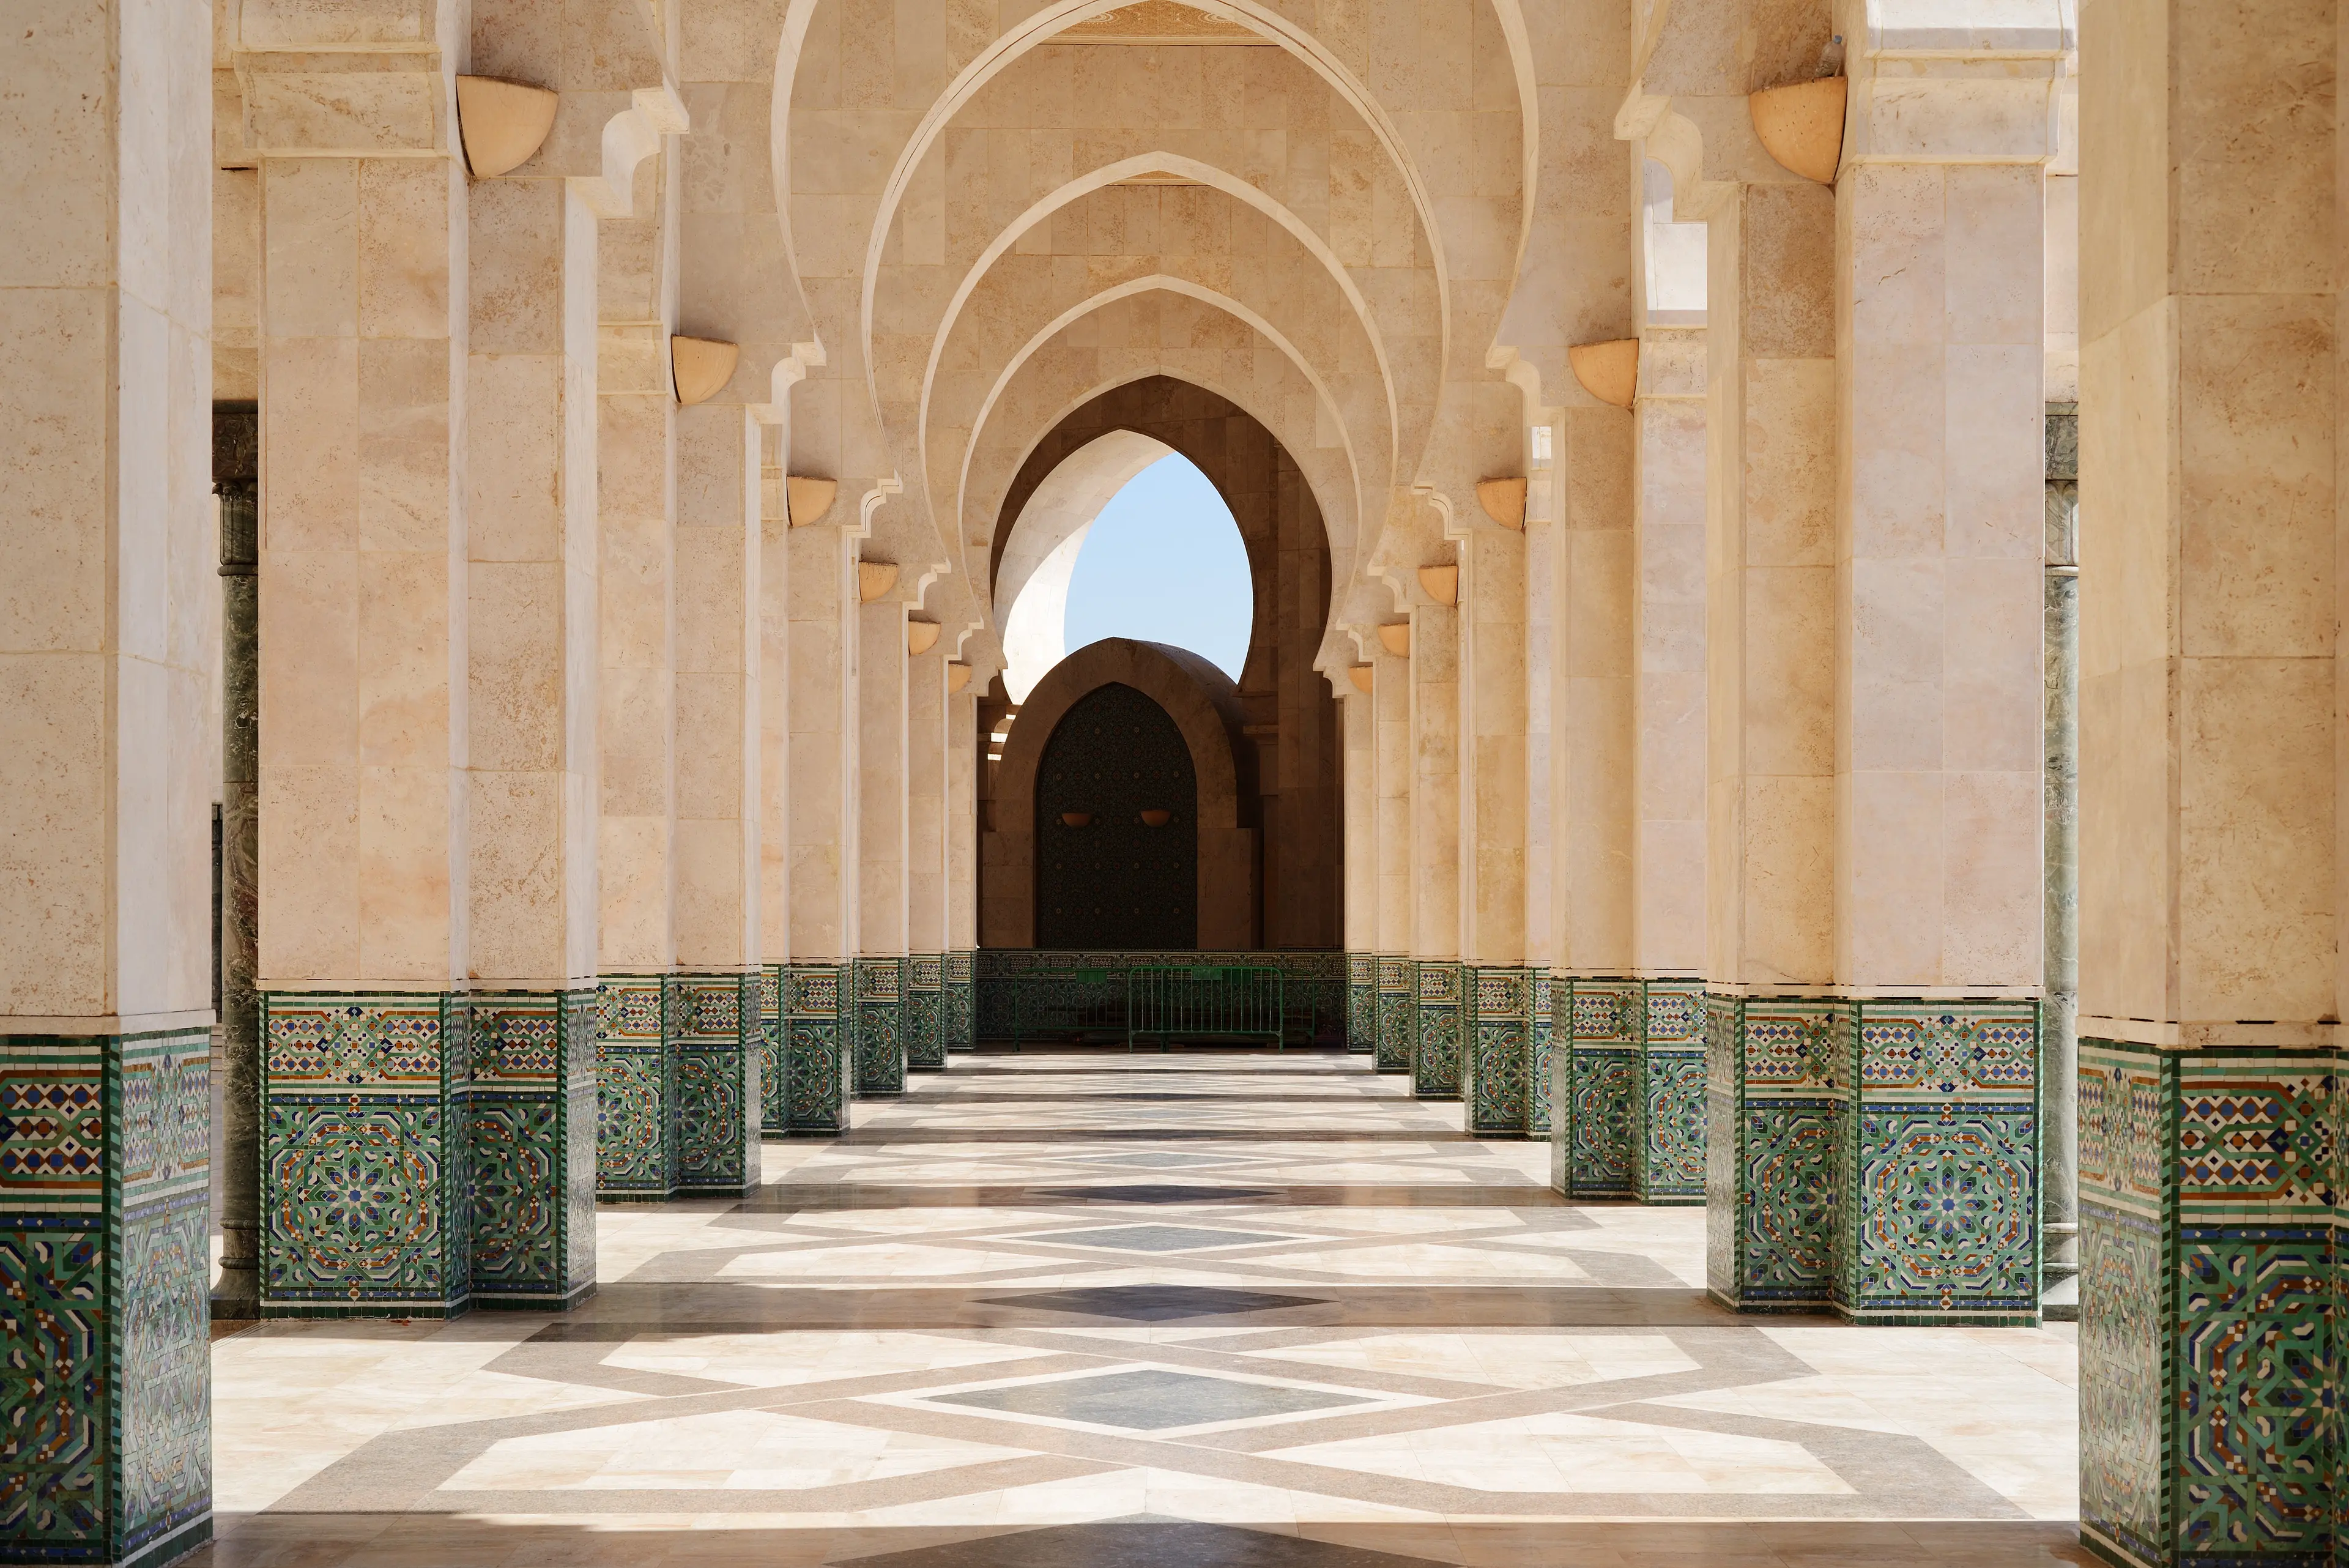 Arcade of the Hassan II mosque